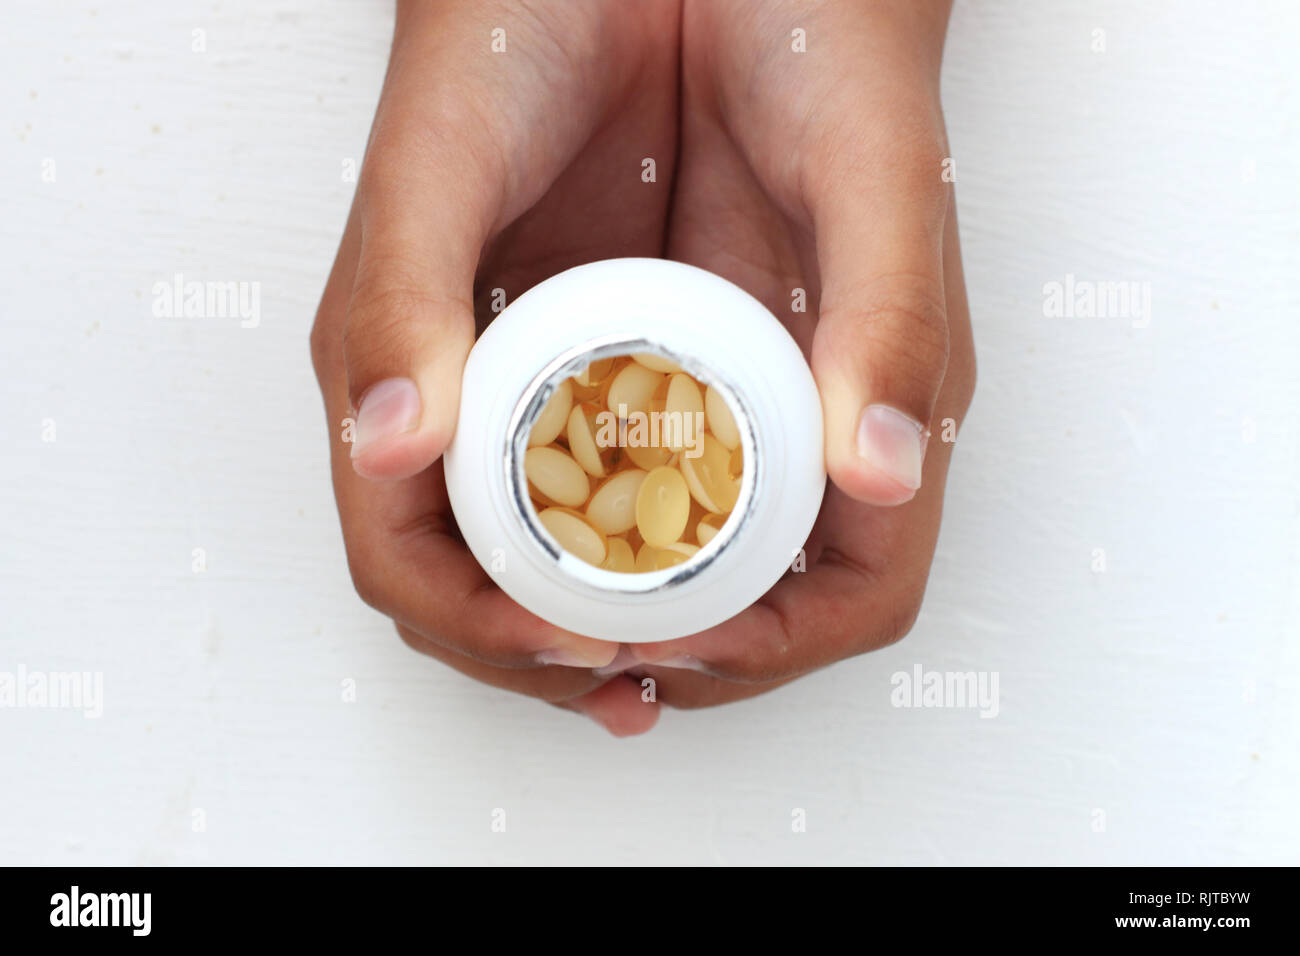 Hand holding bottle of vitamins against white background Stock Photo